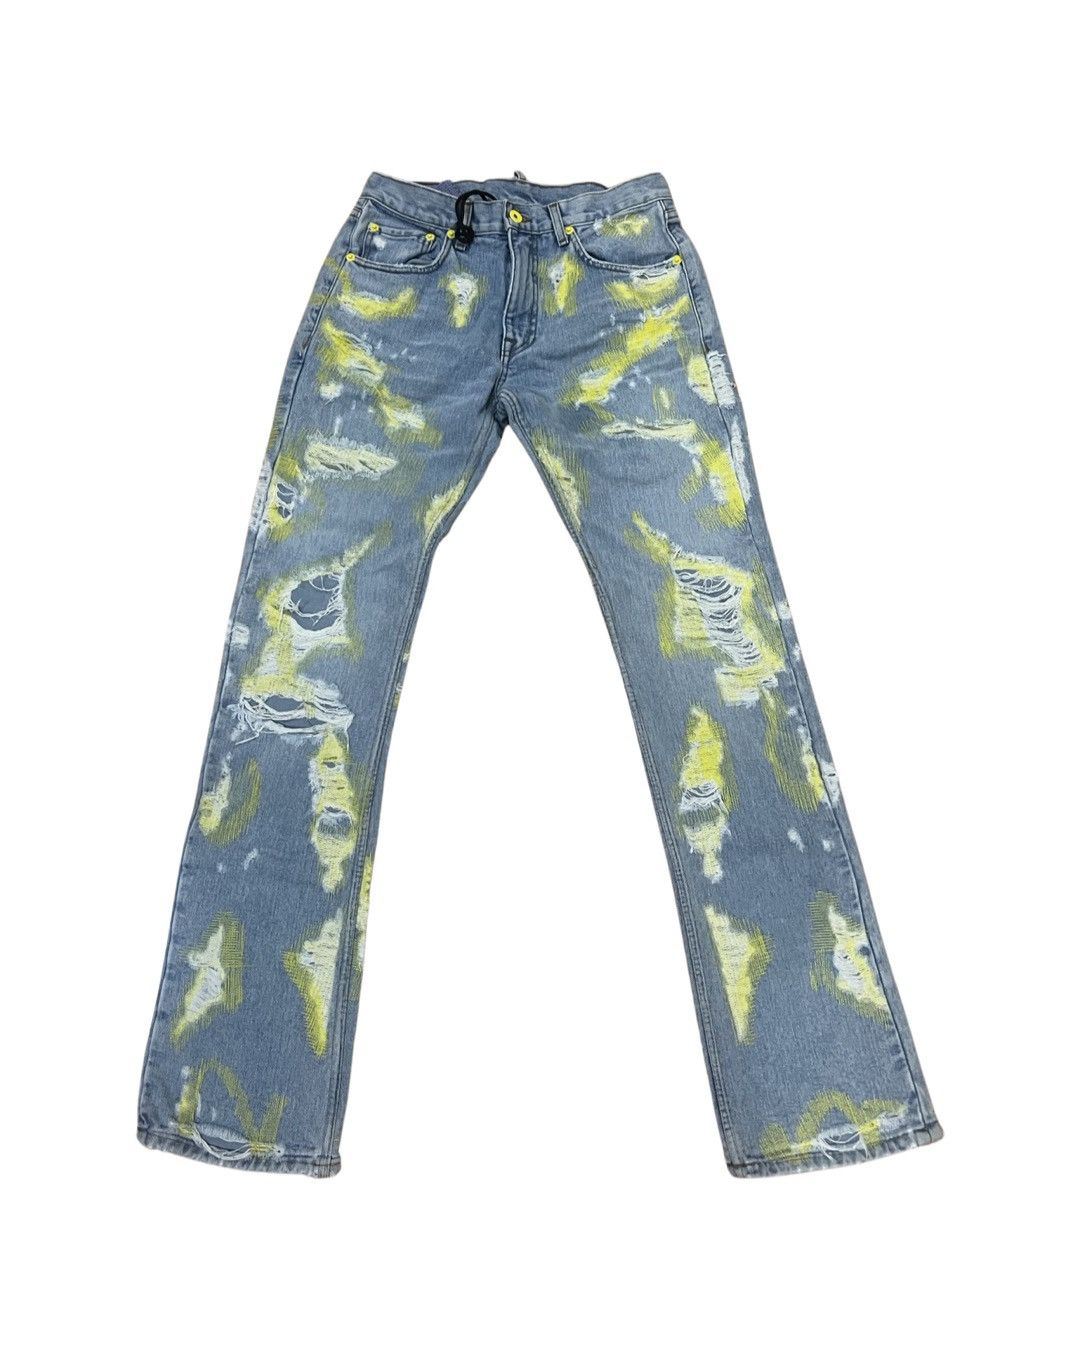 Vlone Endless blue yellow distressed denim jeans | Grailed